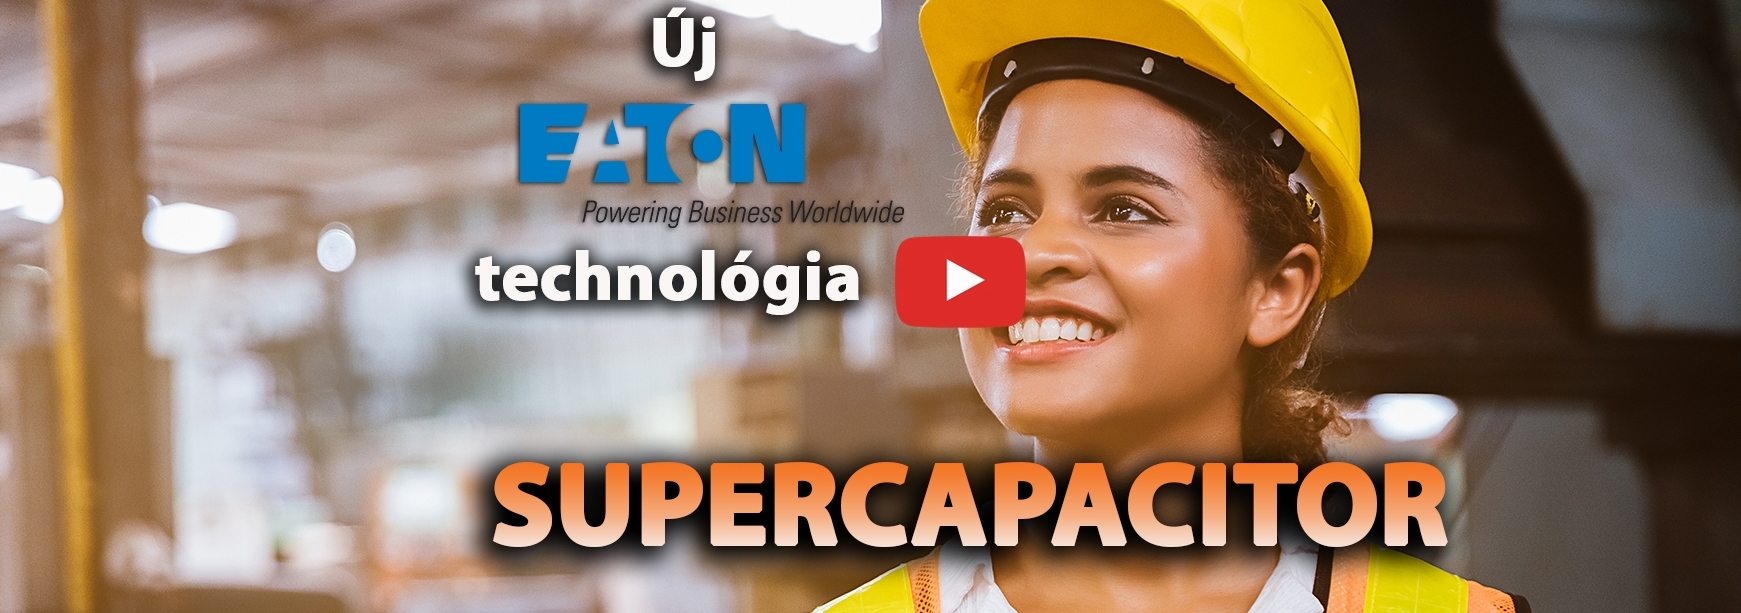 Video Eaton szünetmentes táp supercapacitor